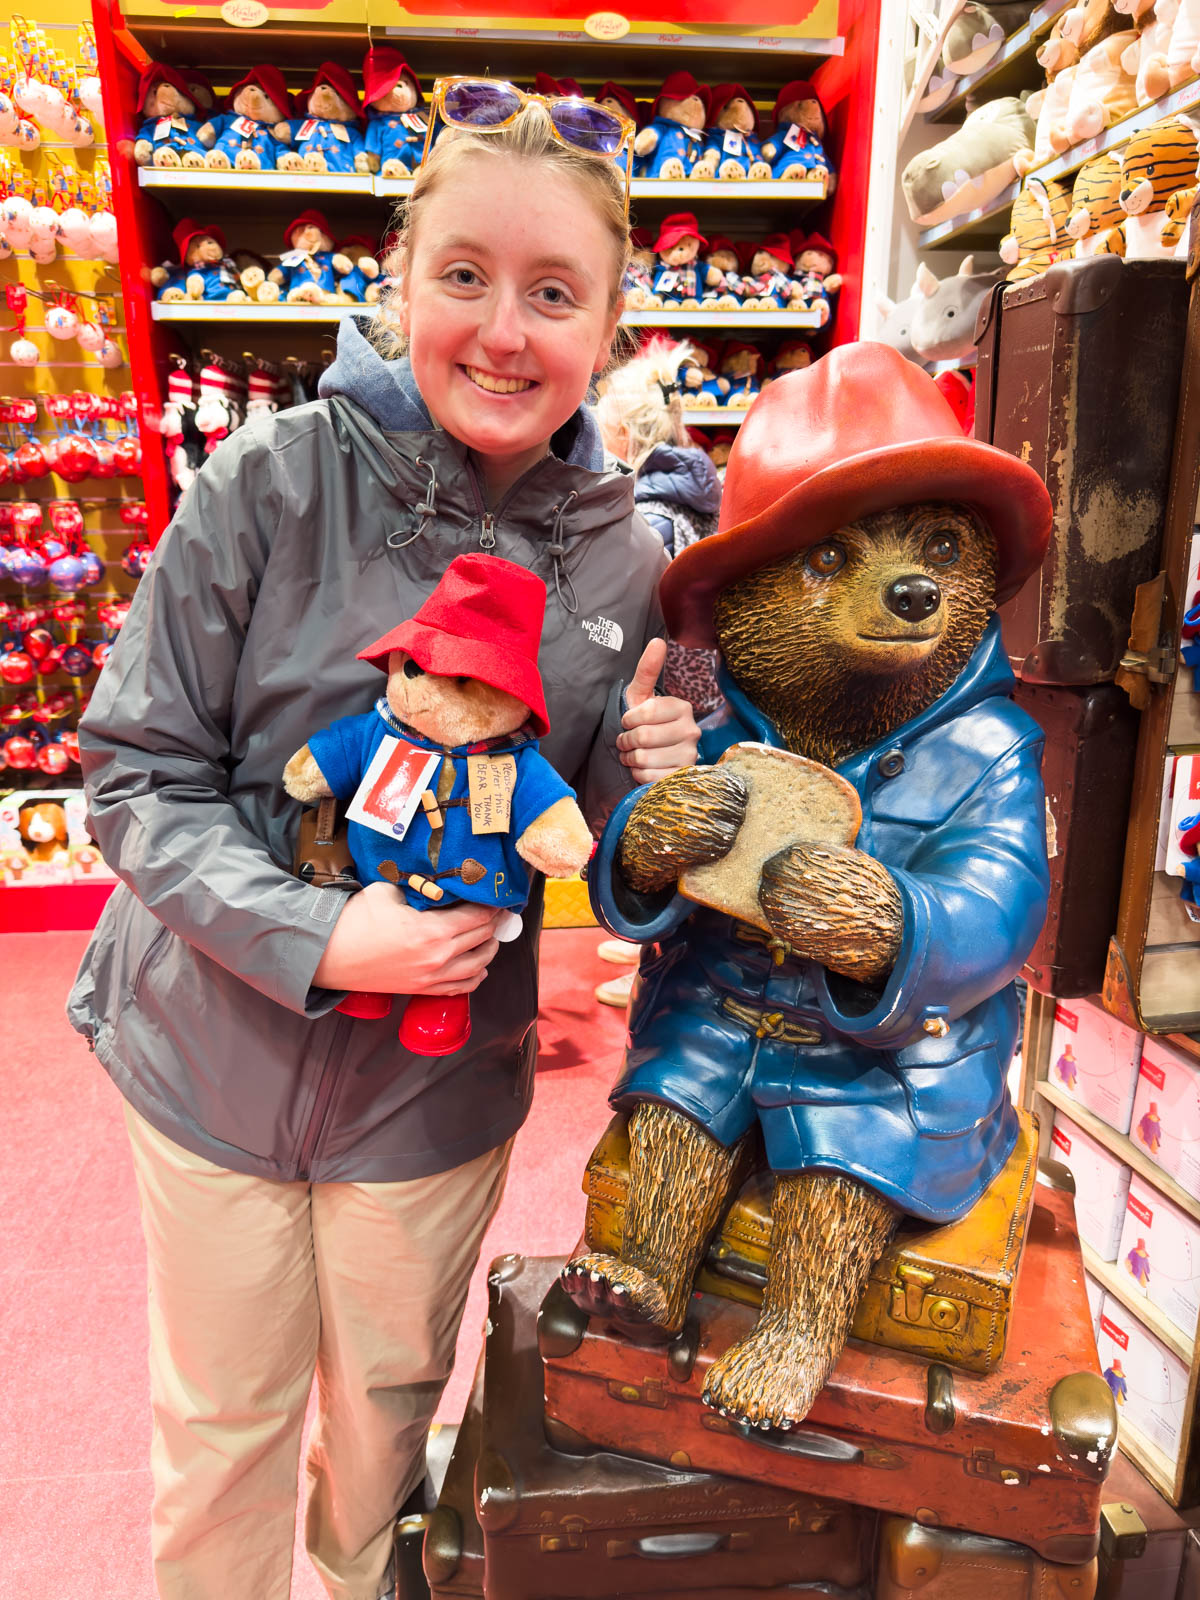 A young girl poses with a Paddington bear toy next to a Paddington bear statue.